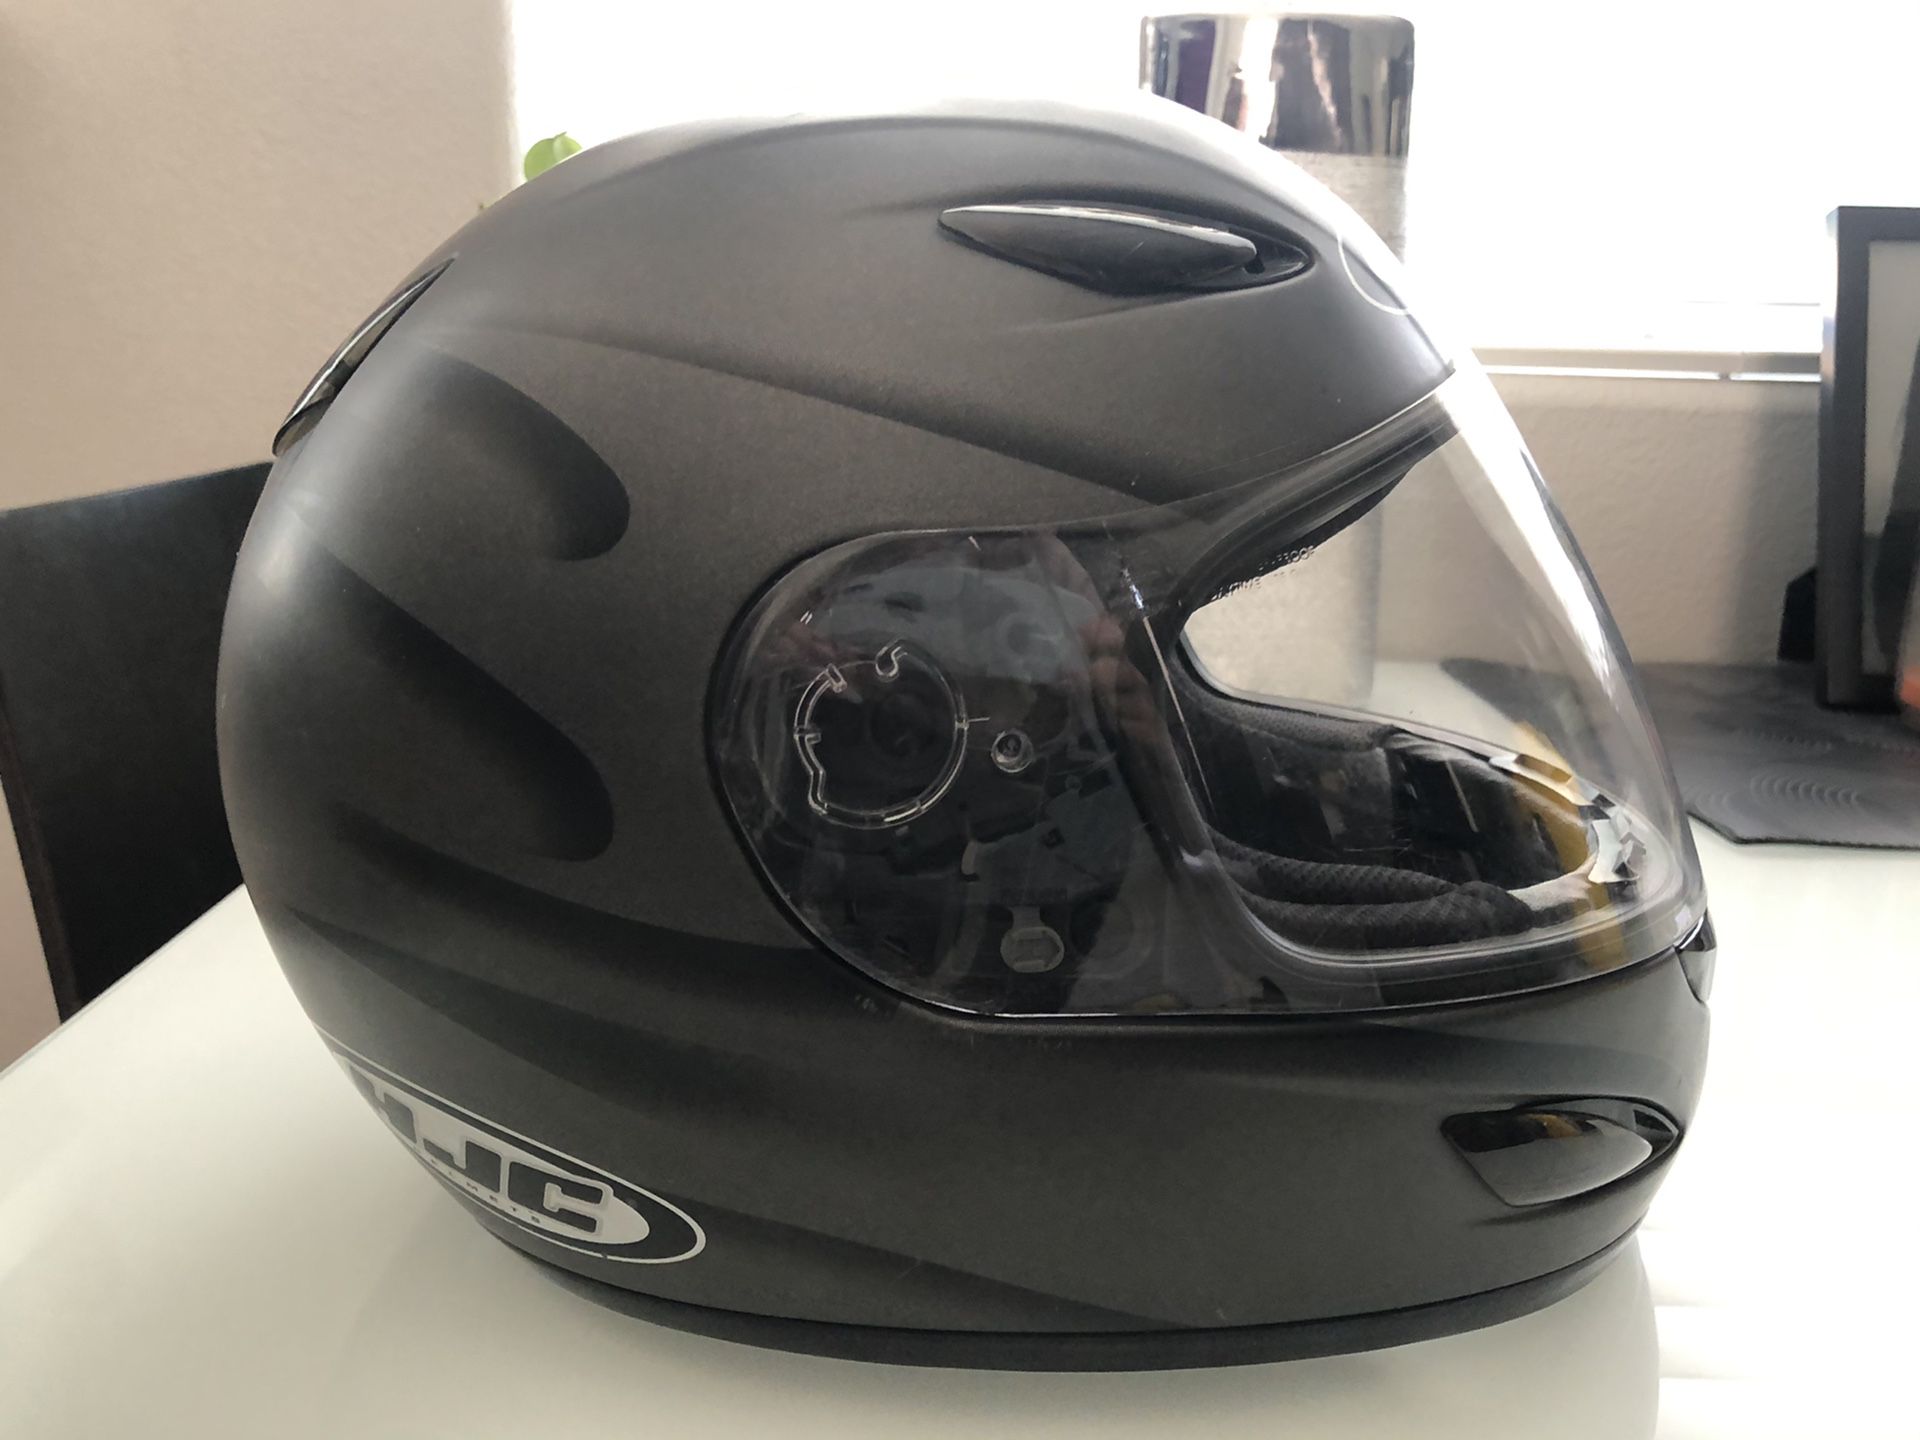 FirstGear motorcycle jacket and HJC helmet